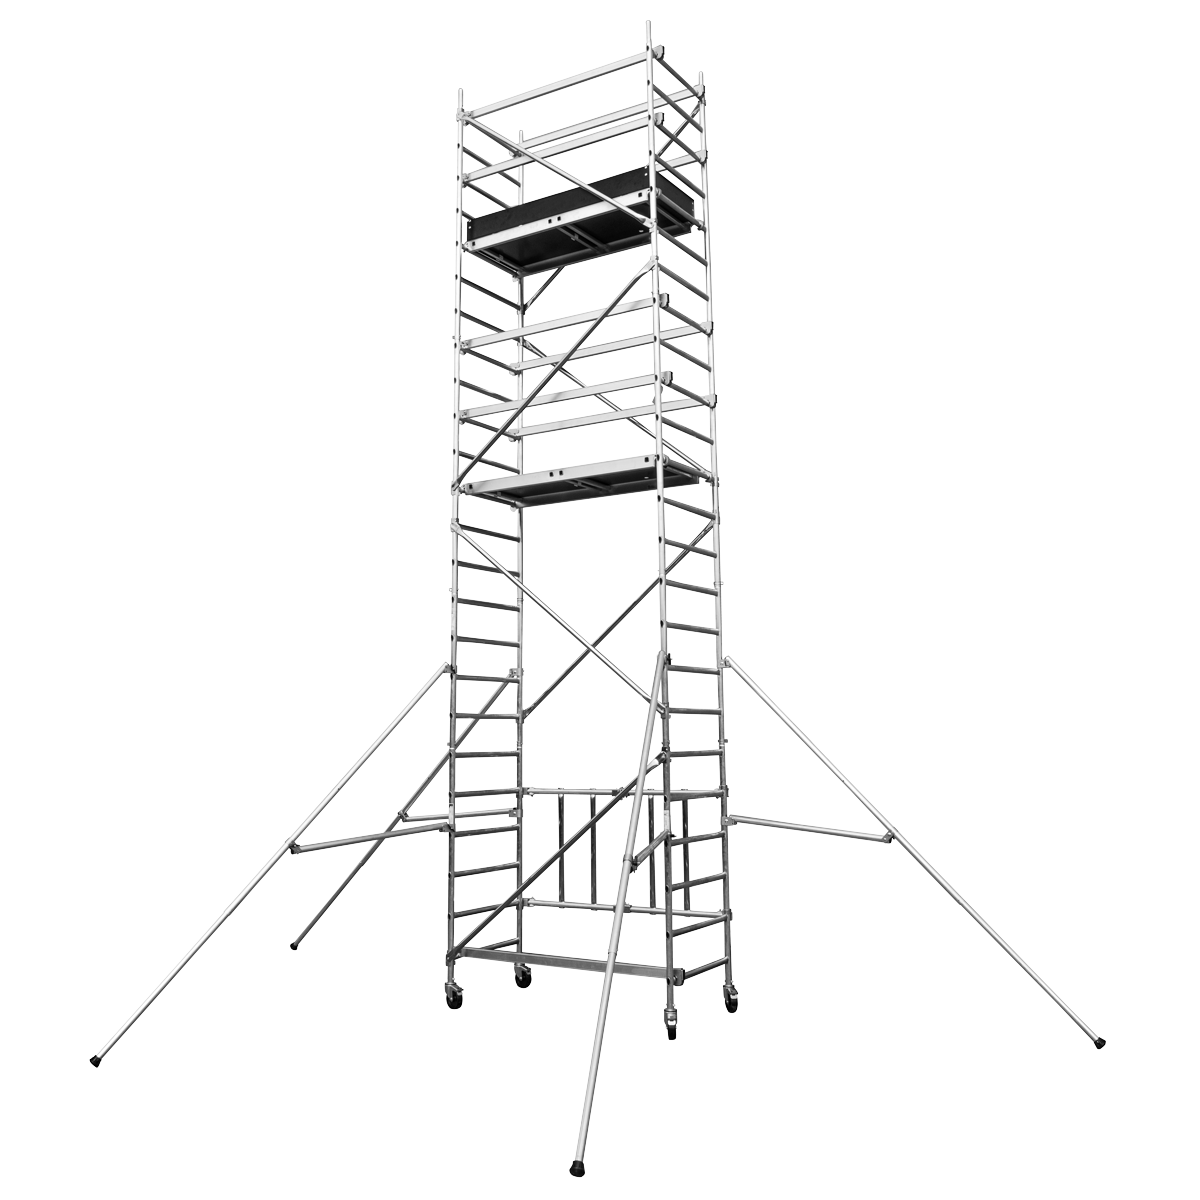 Platform Scaffold Tower Combo EN 1004 -1